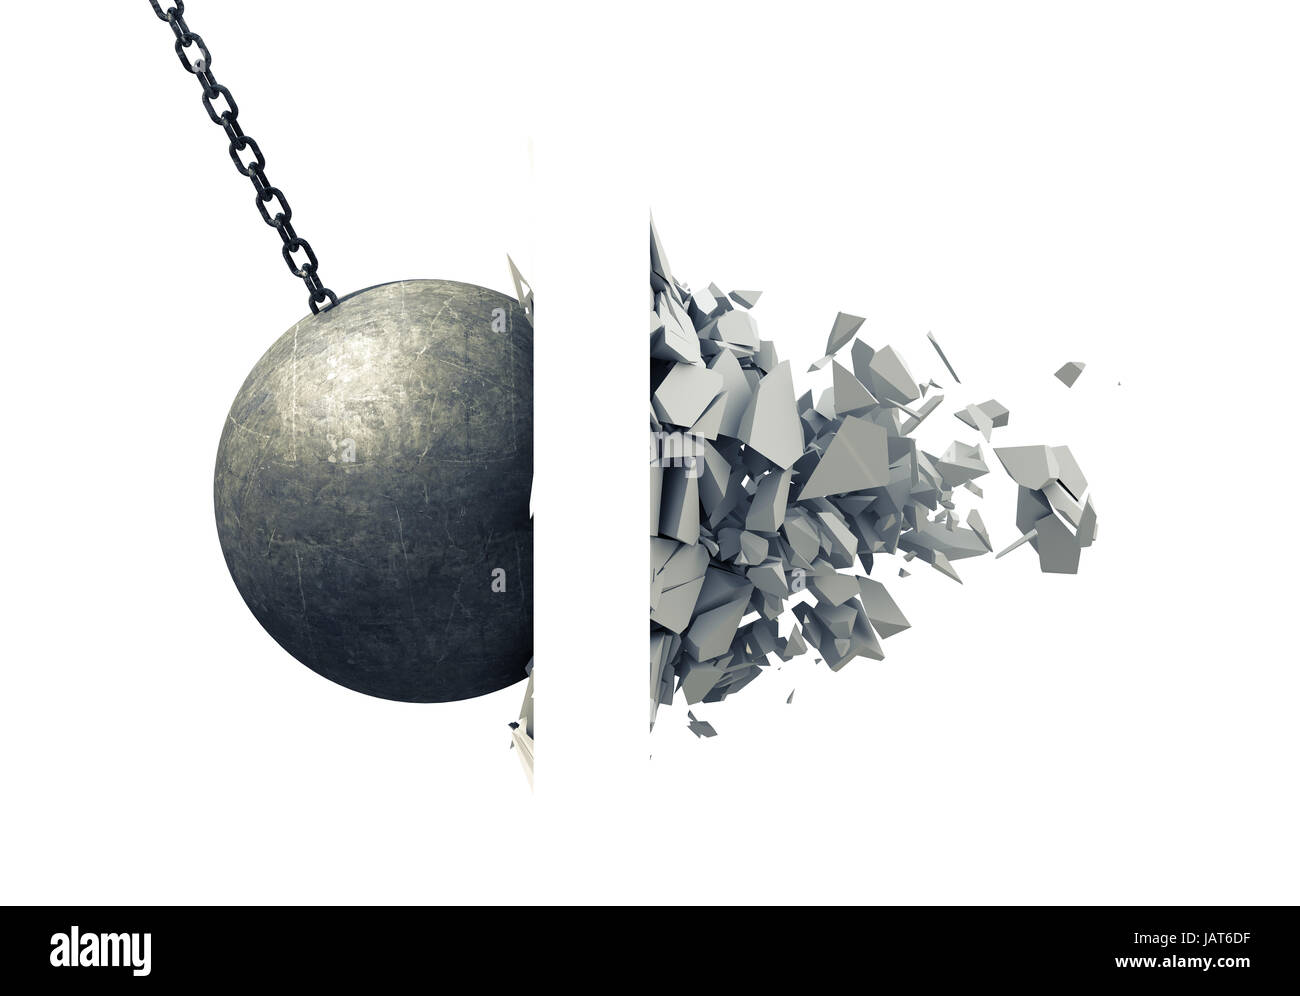 Metallic Wrecking Ball Shattering Wall. 3D Illustration Stock Photo - Alamy